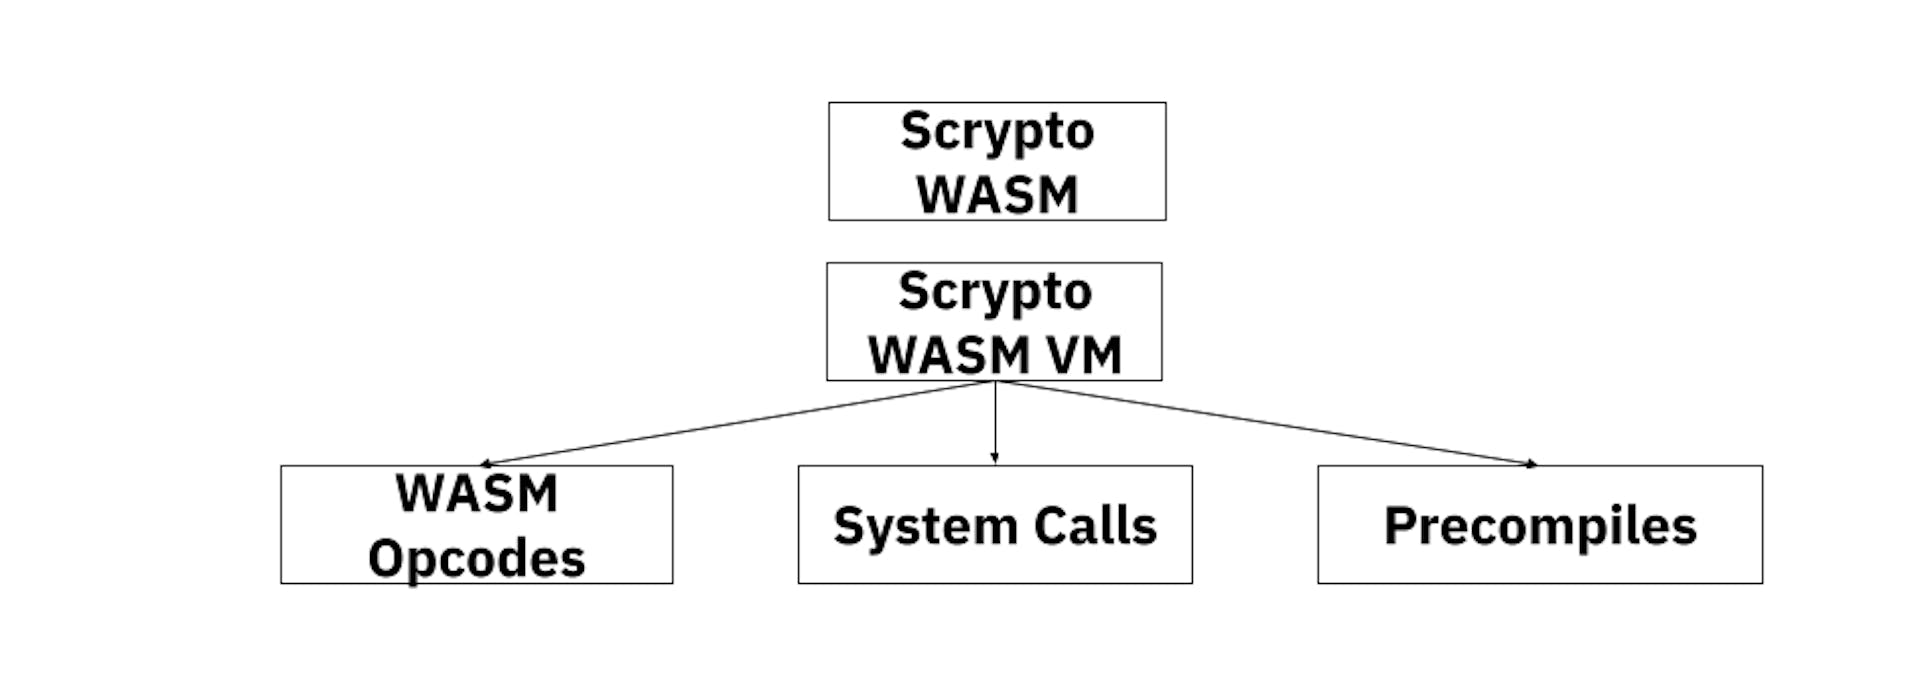 Scrypto WASM VM Model